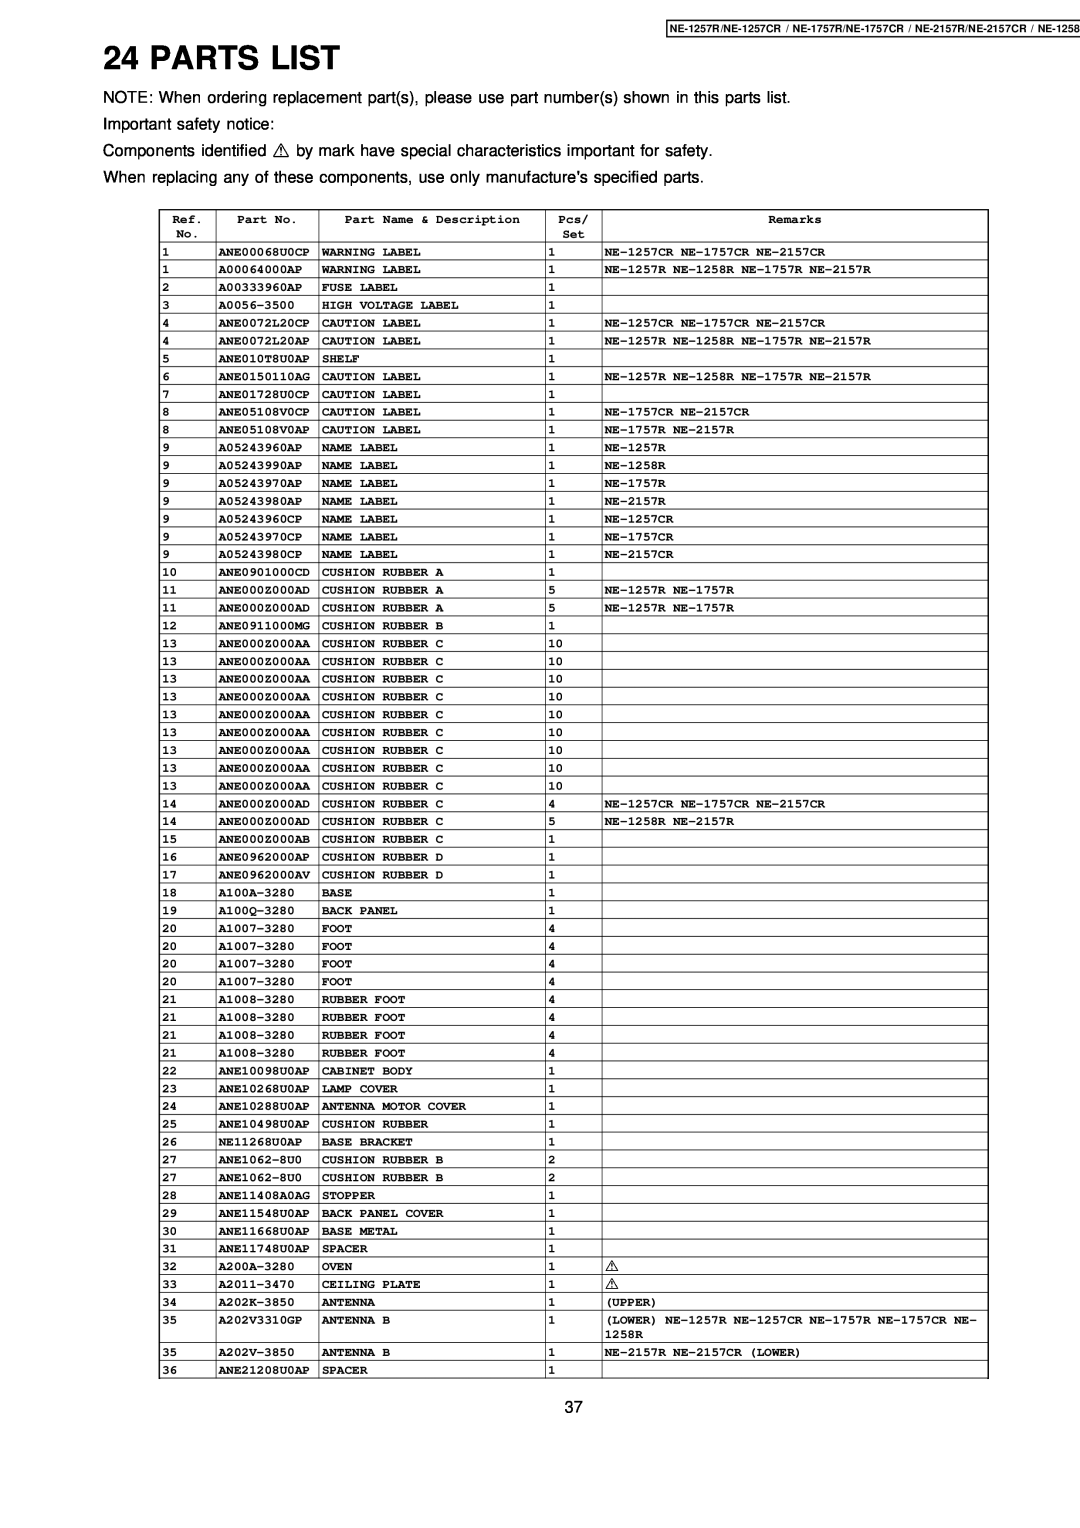 Panasonic NE-1757CR, NE-2157CR, NE-1257CR manual Parts List 